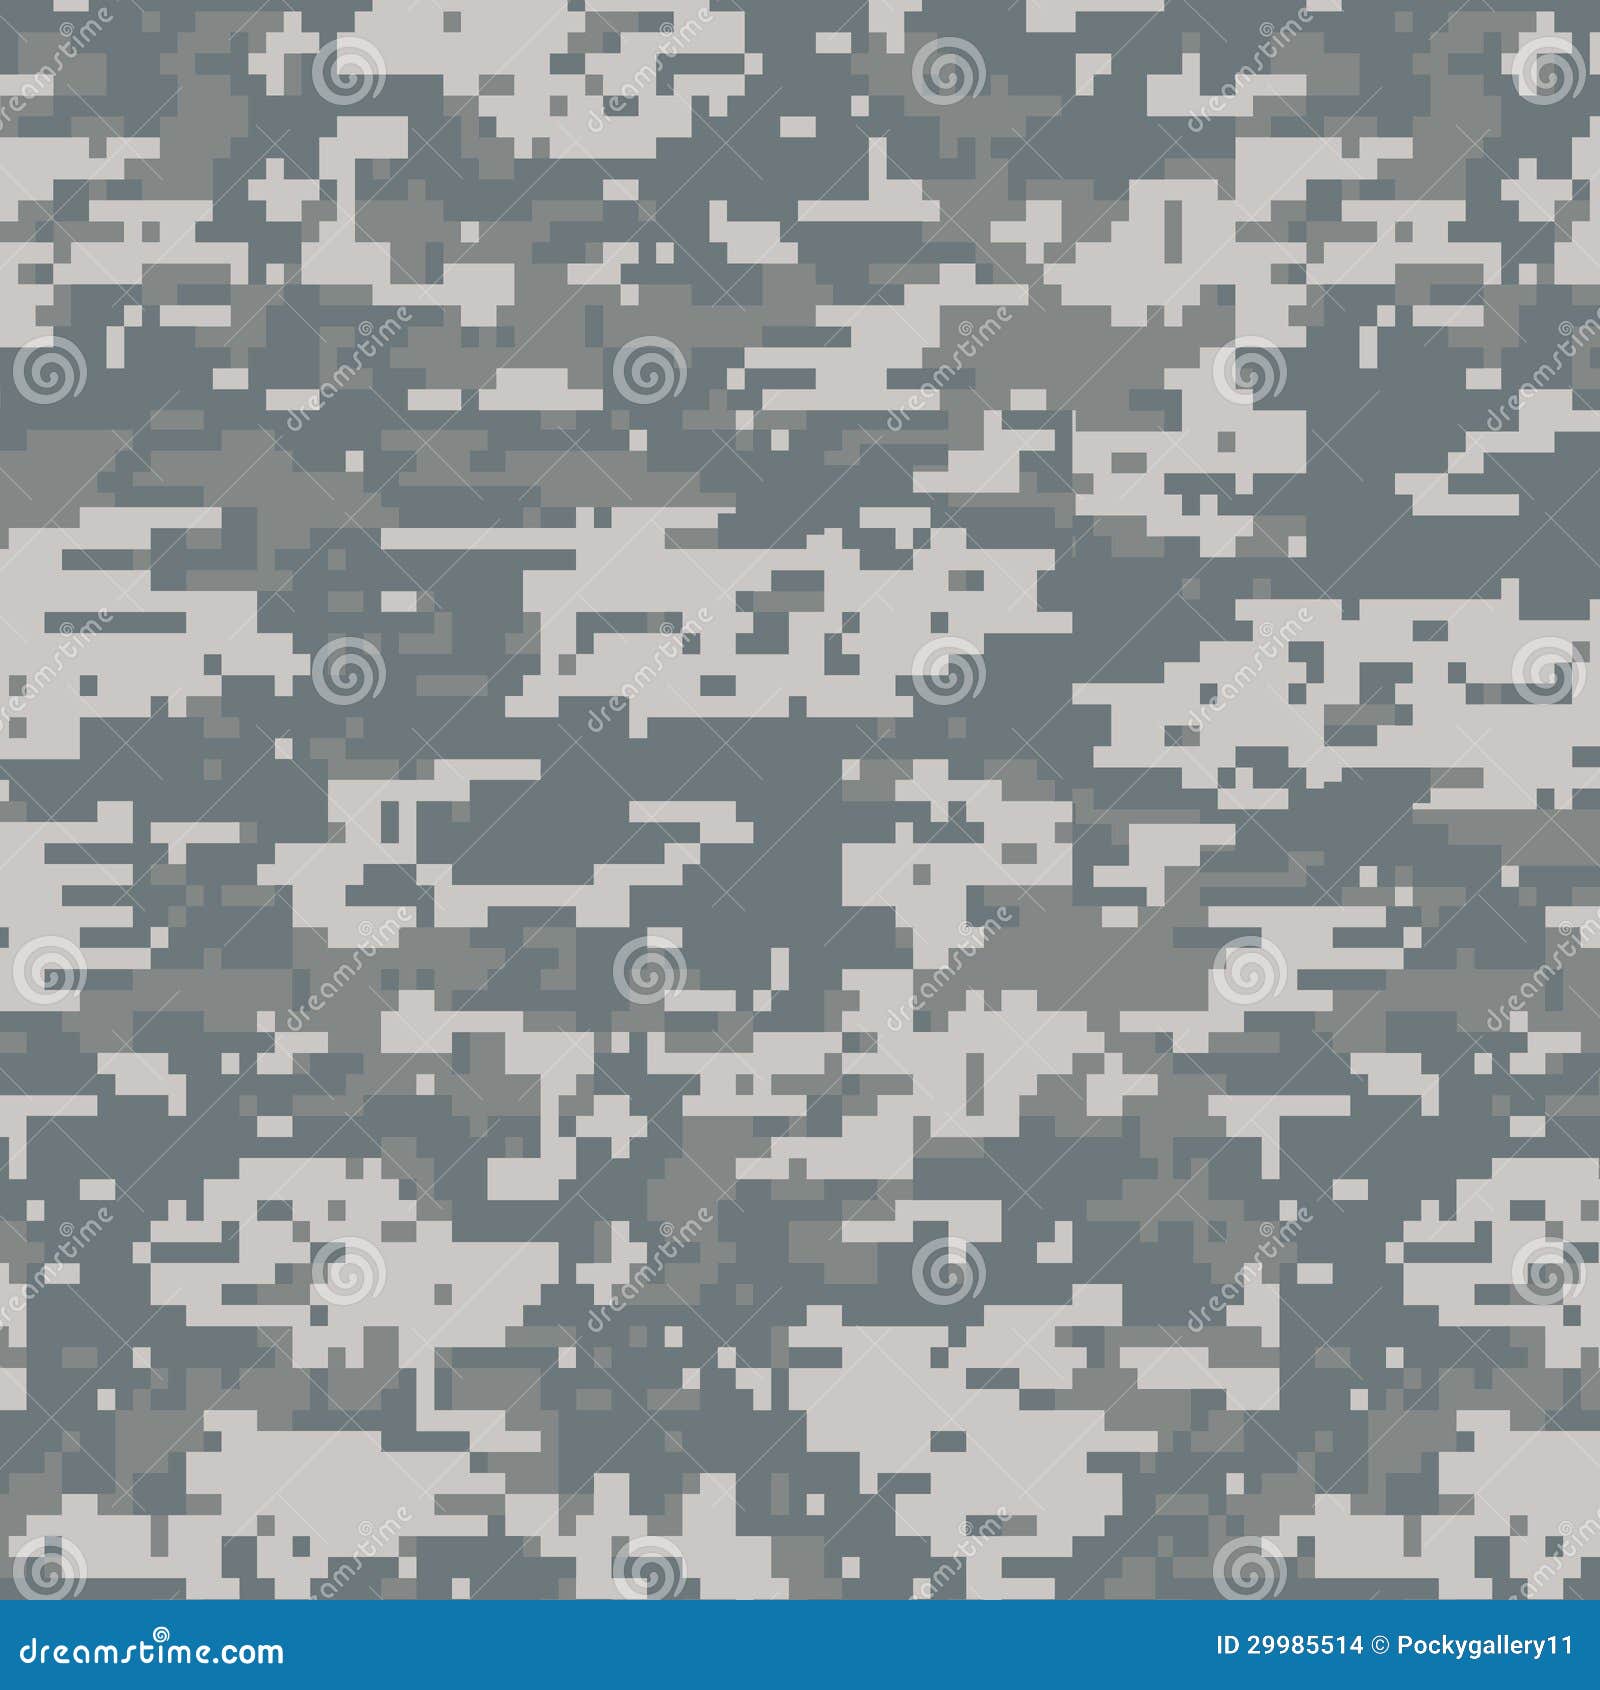 digital camouflage seamless pattern